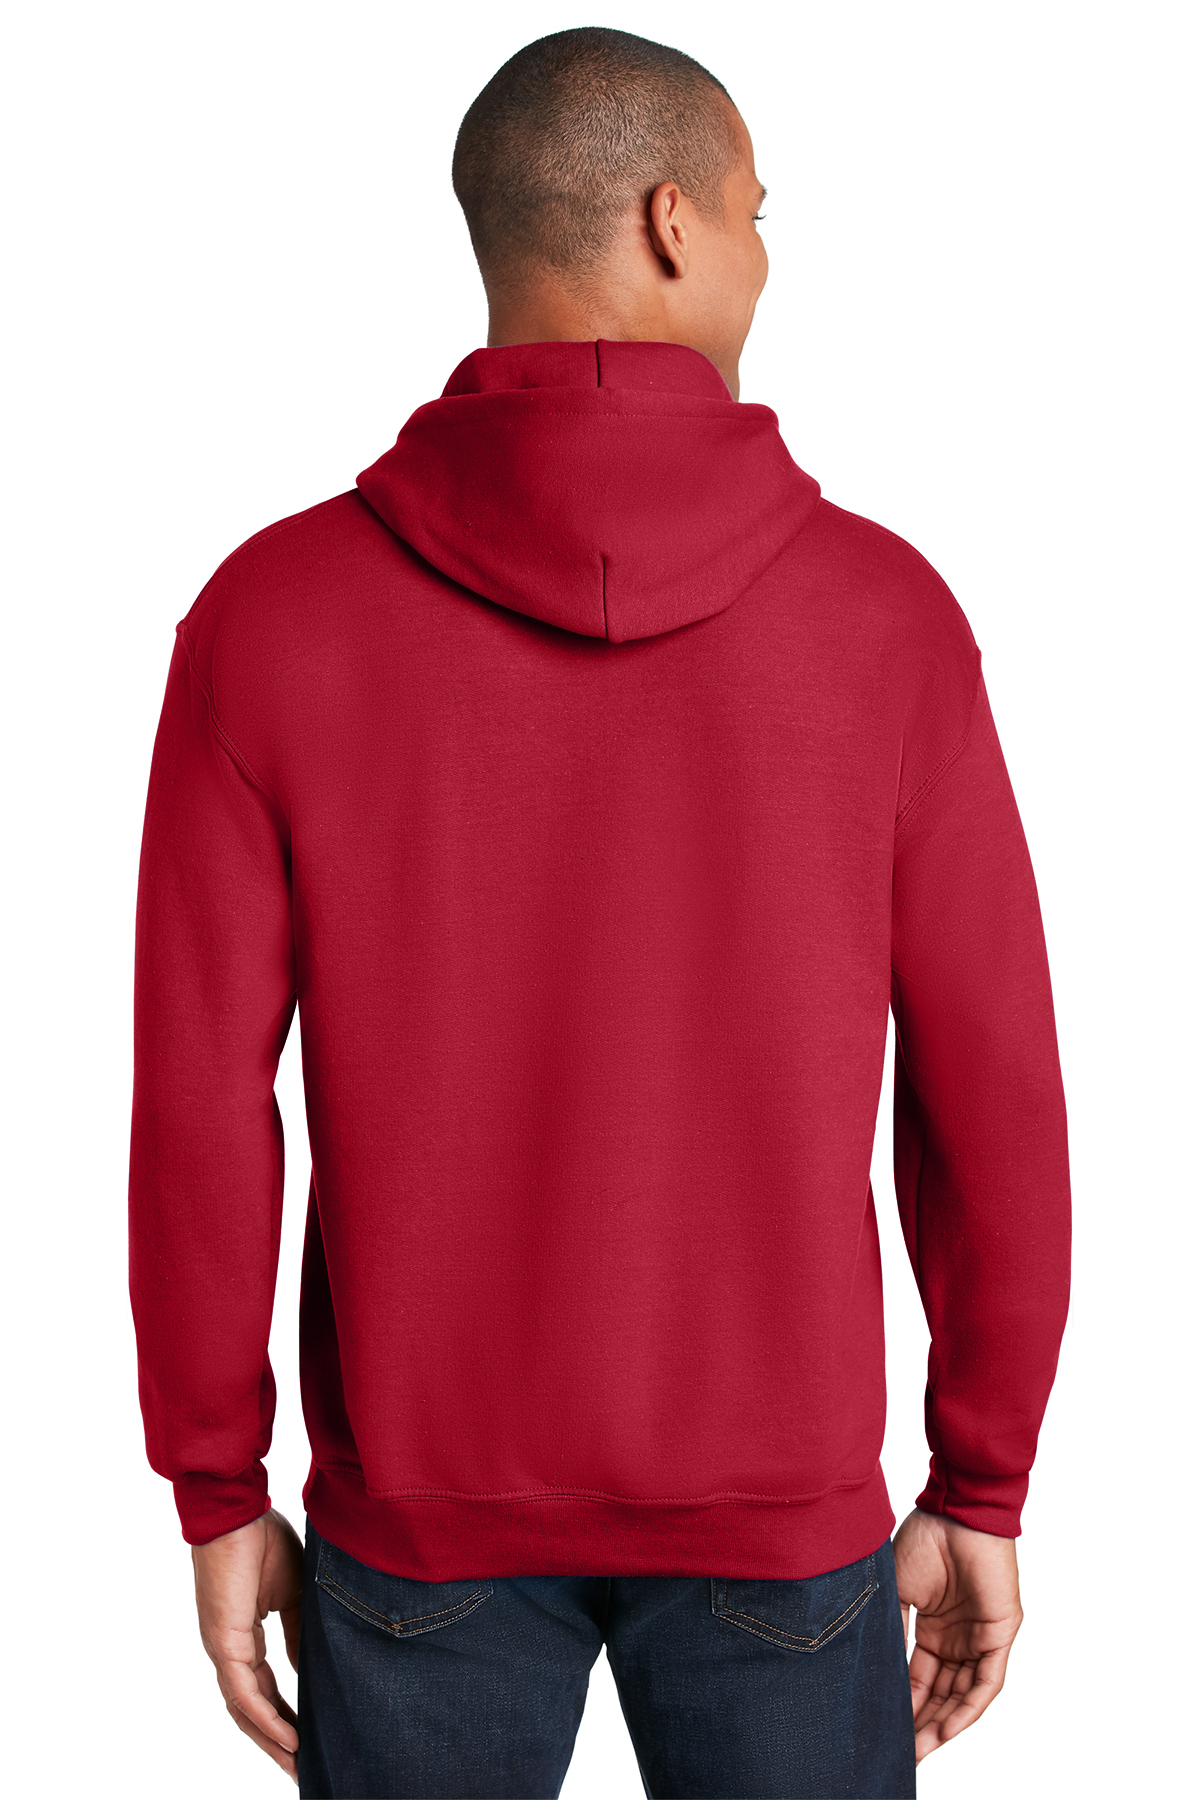 Gildan - Sweatshirt - Cherry Red